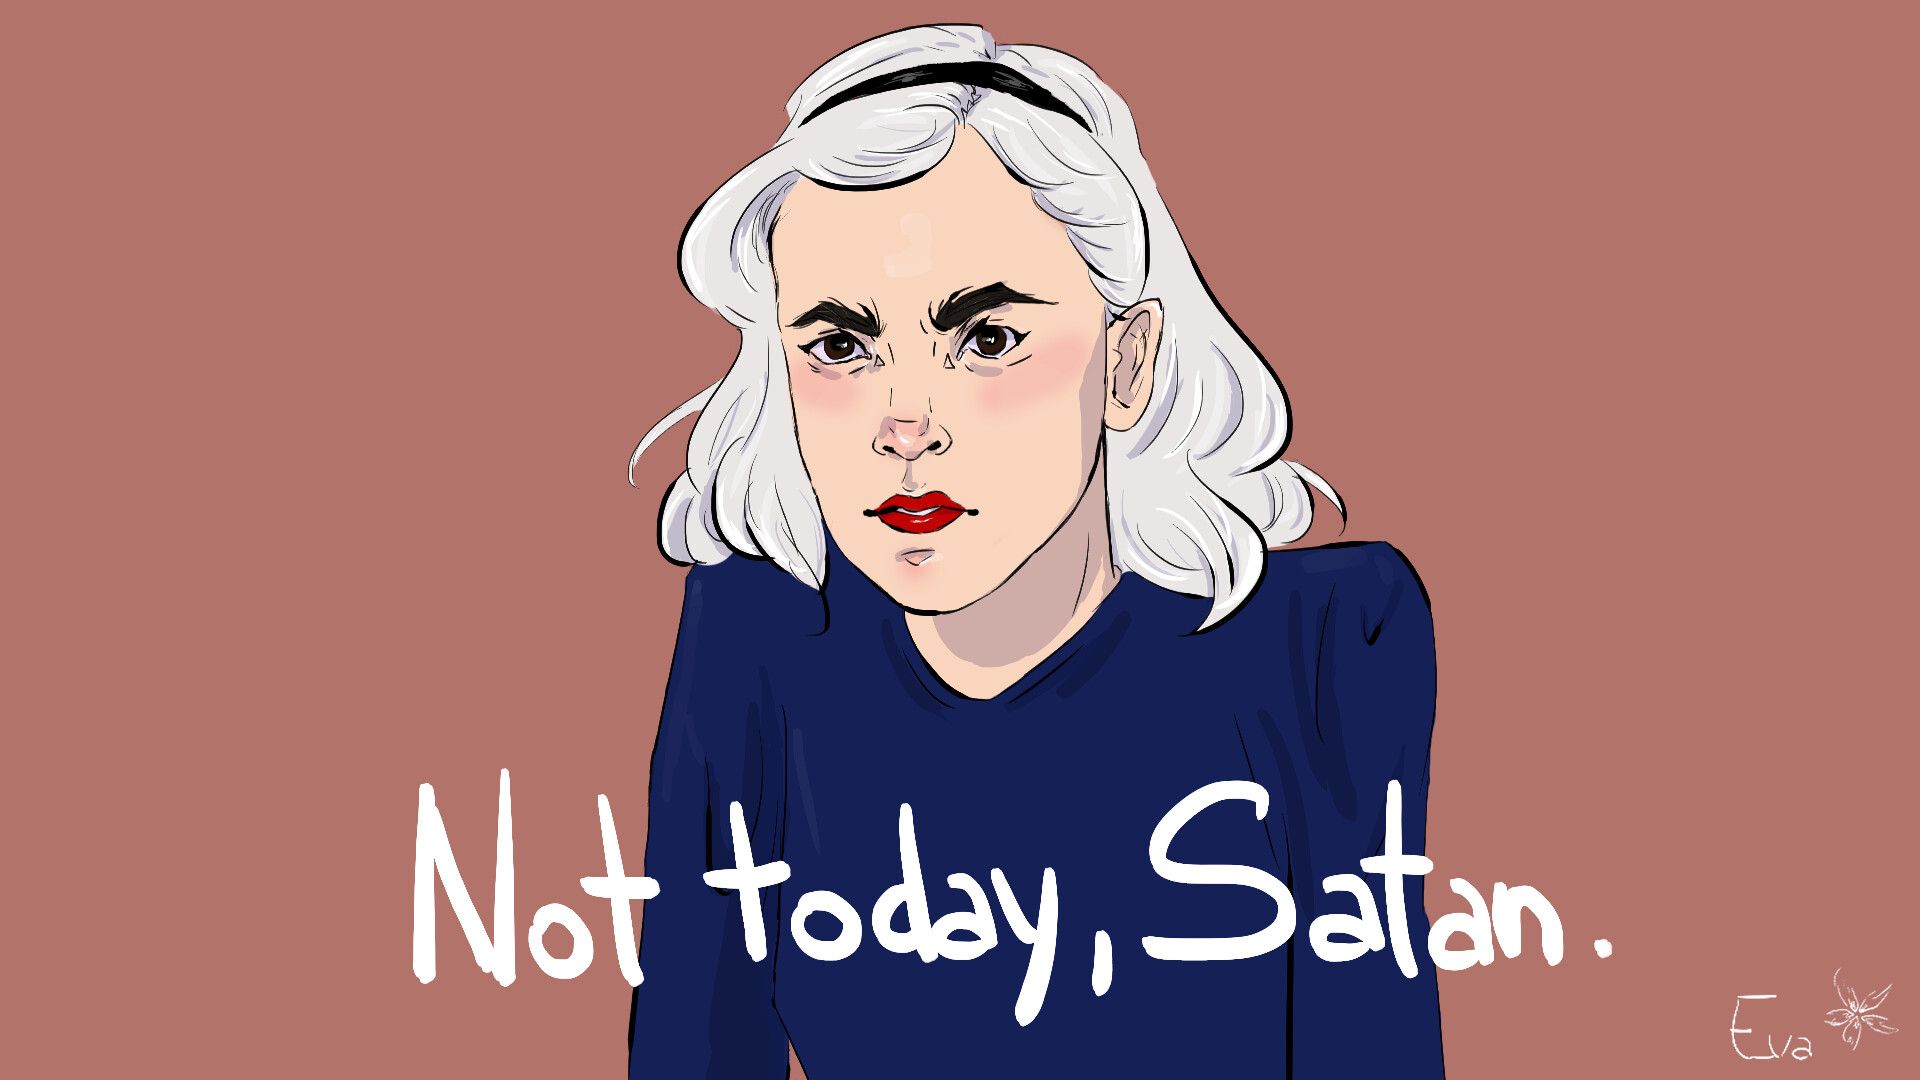 Not Today, Satan, Eva Alonso